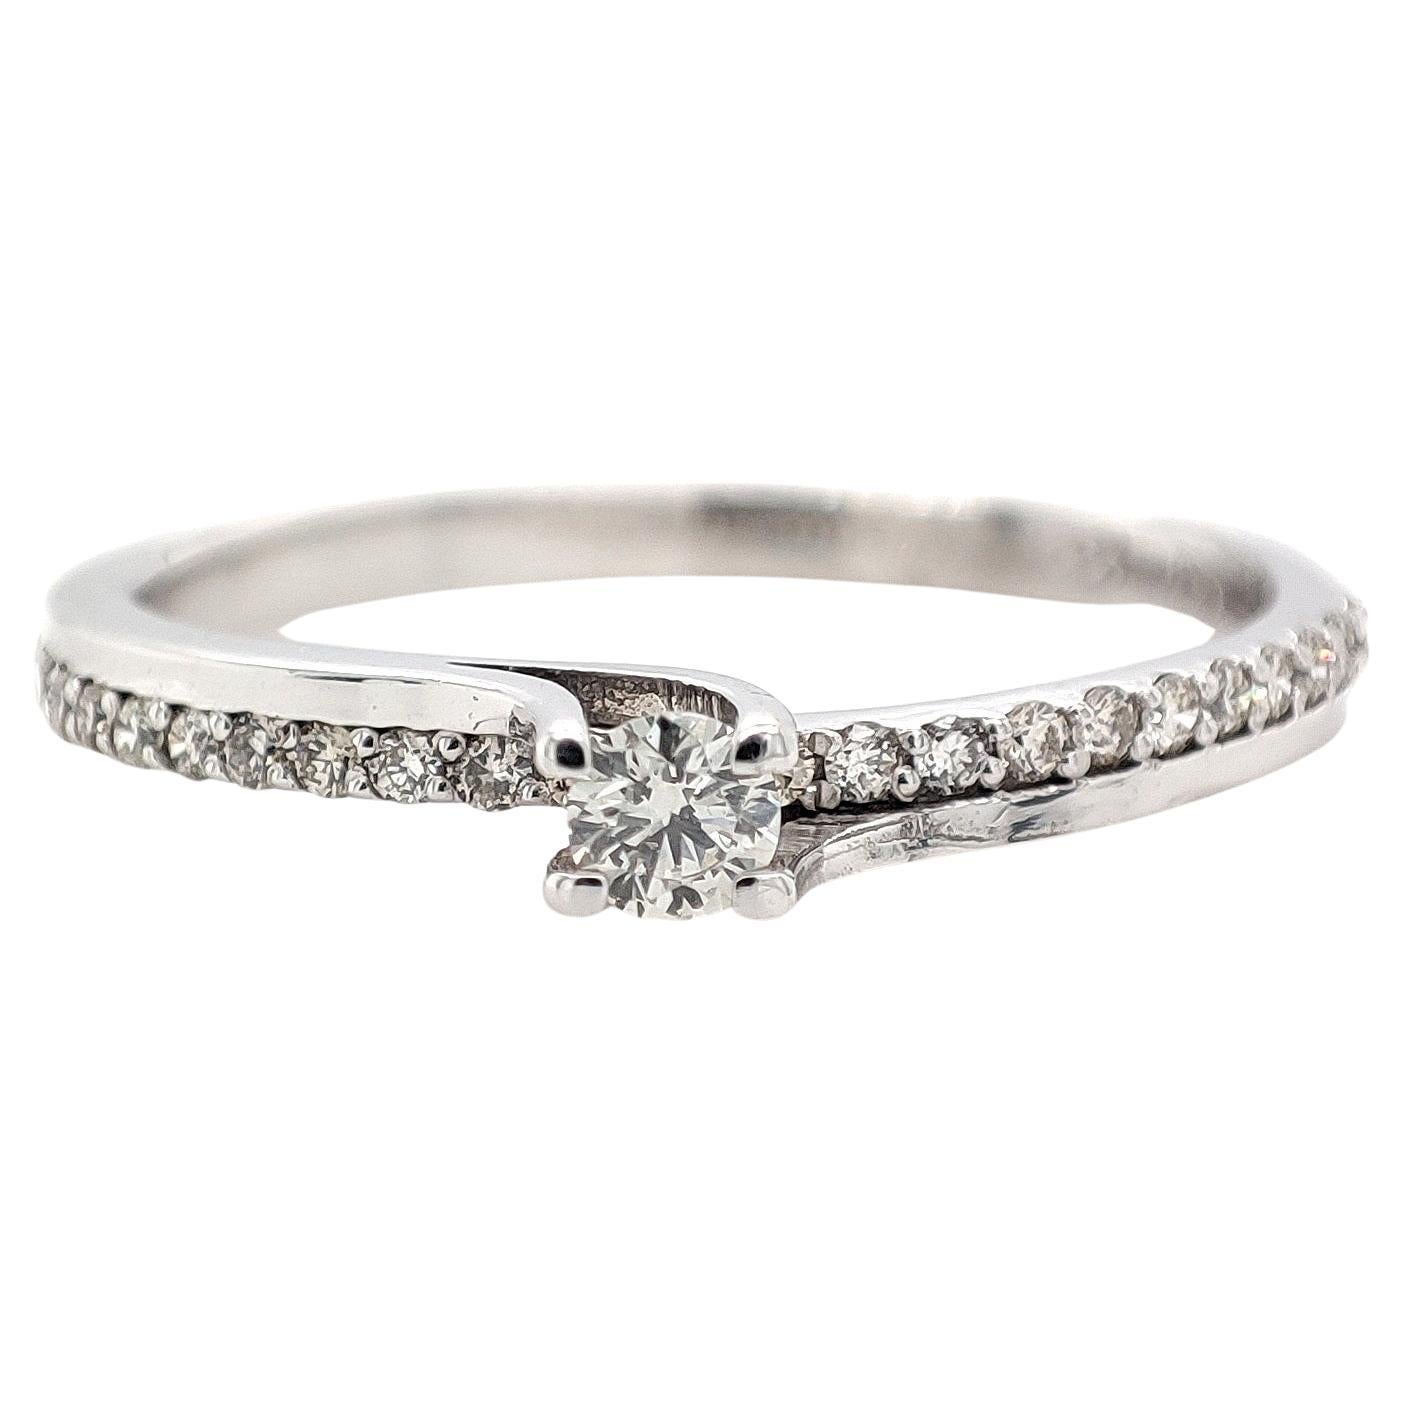 NO RESERVE 0.24CT Round Diamond Engagement Wedding Ring 14K White Gold  